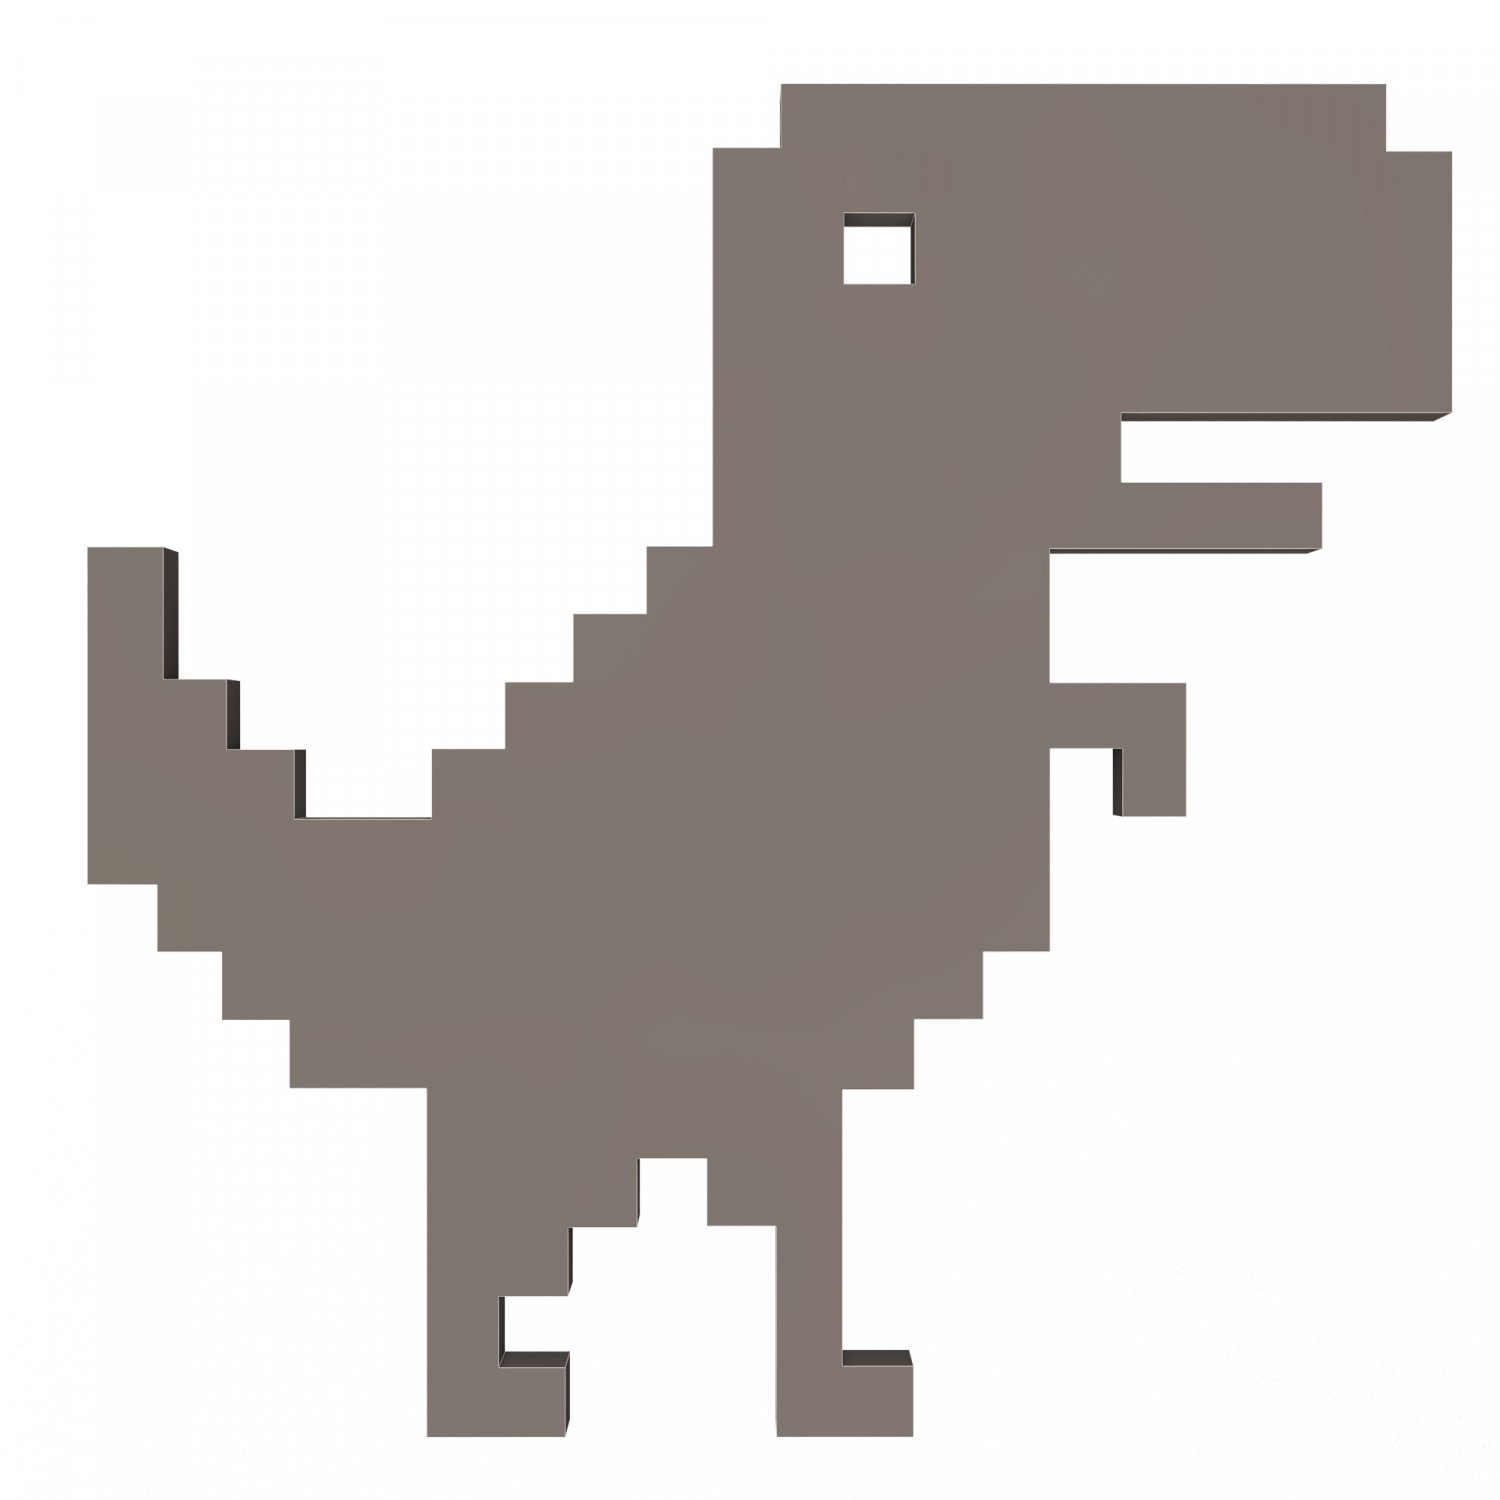 Google Dinosaur.chrome Dinosaur.dinosaur Jewelry.t Rex 